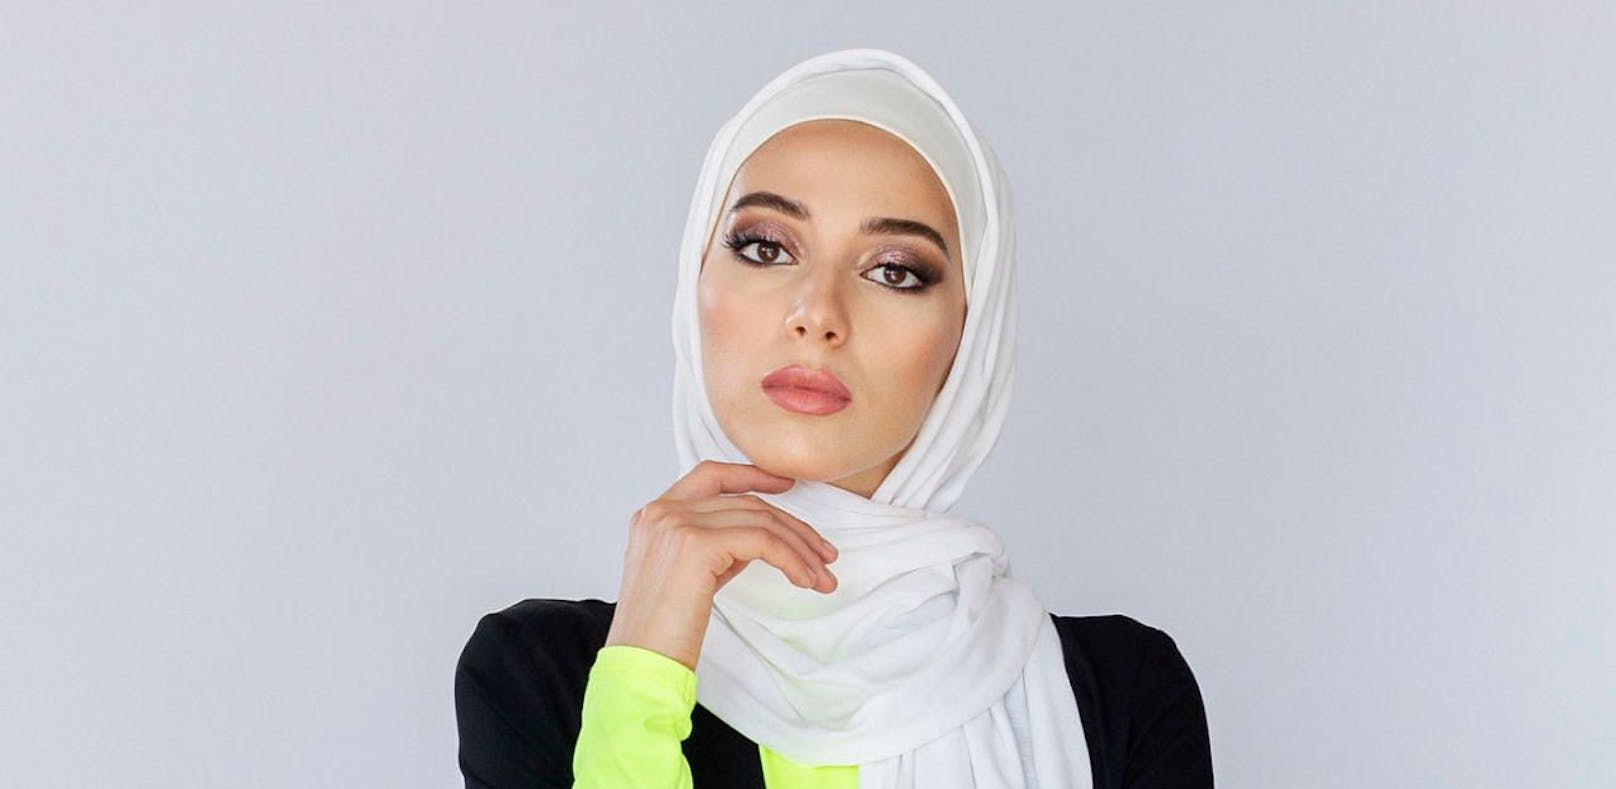 Topmodel-Kandidatin mit muslimischem Hijab